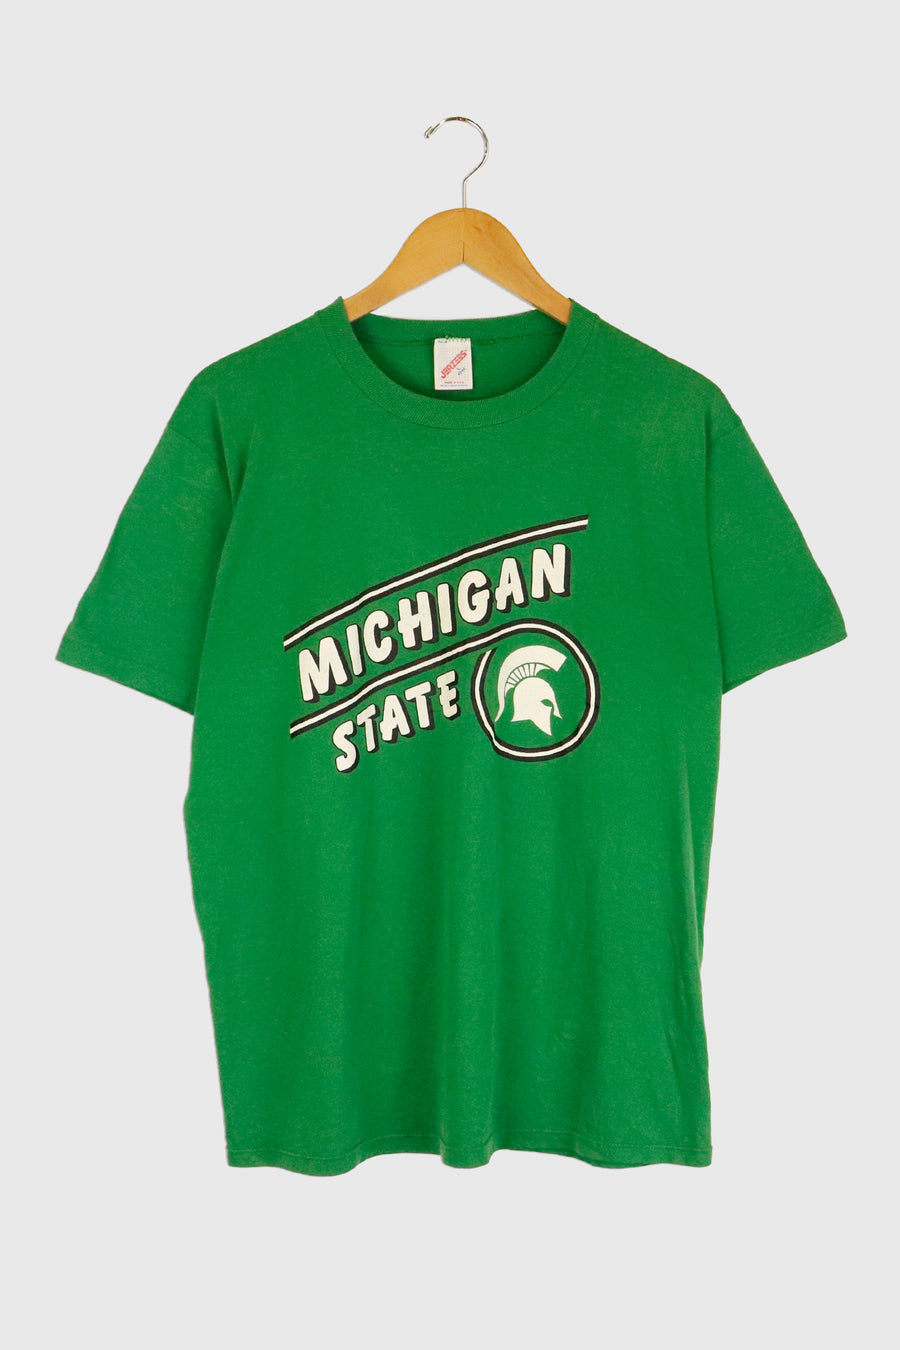 Vintage Michigan State Helmet Graphic T Shirt Sz L